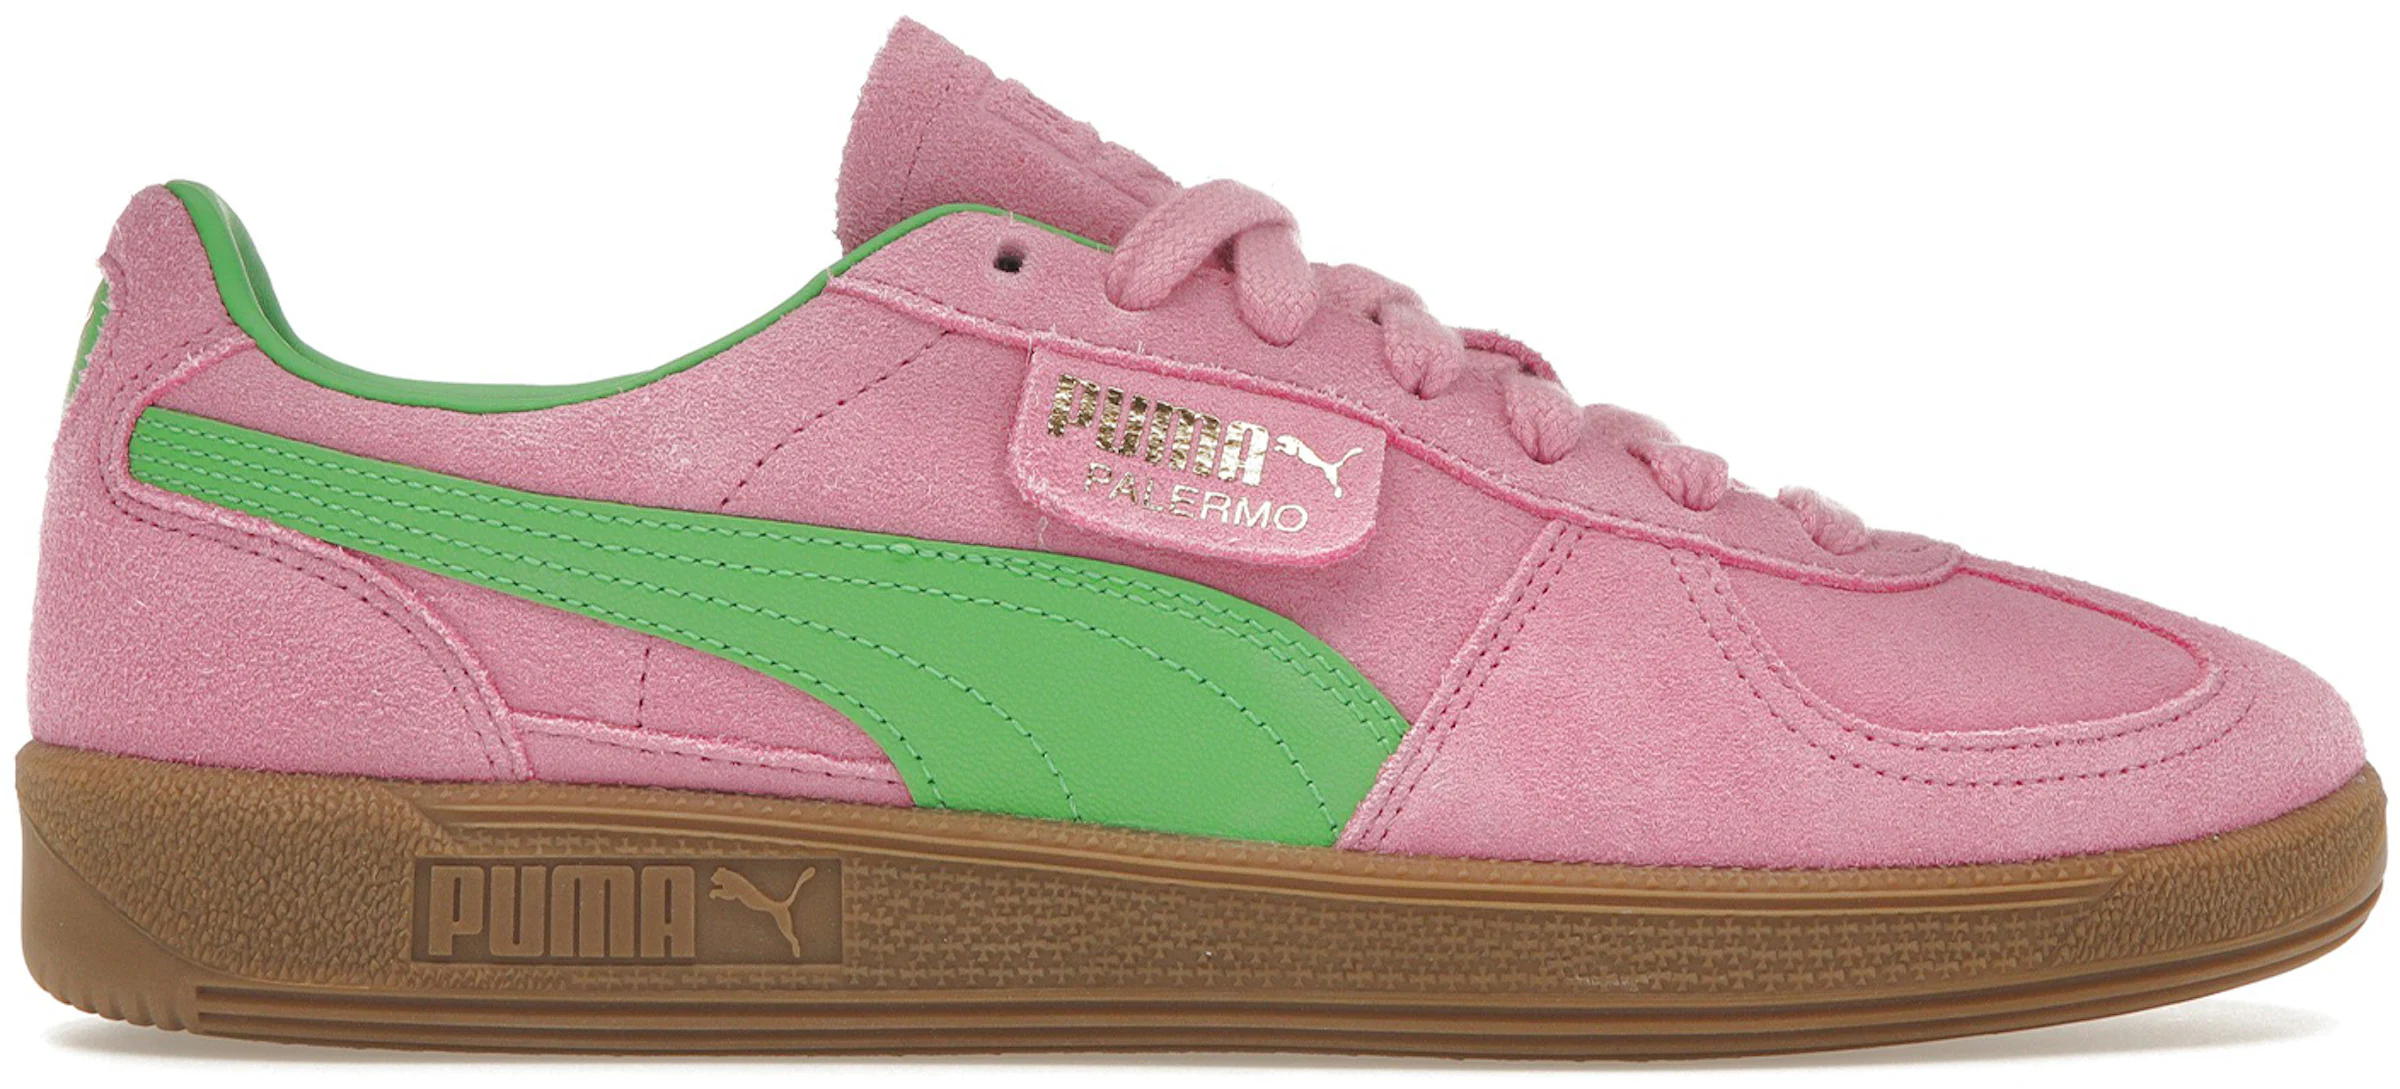 Puma Palermo Pink Delight Green (Women's)